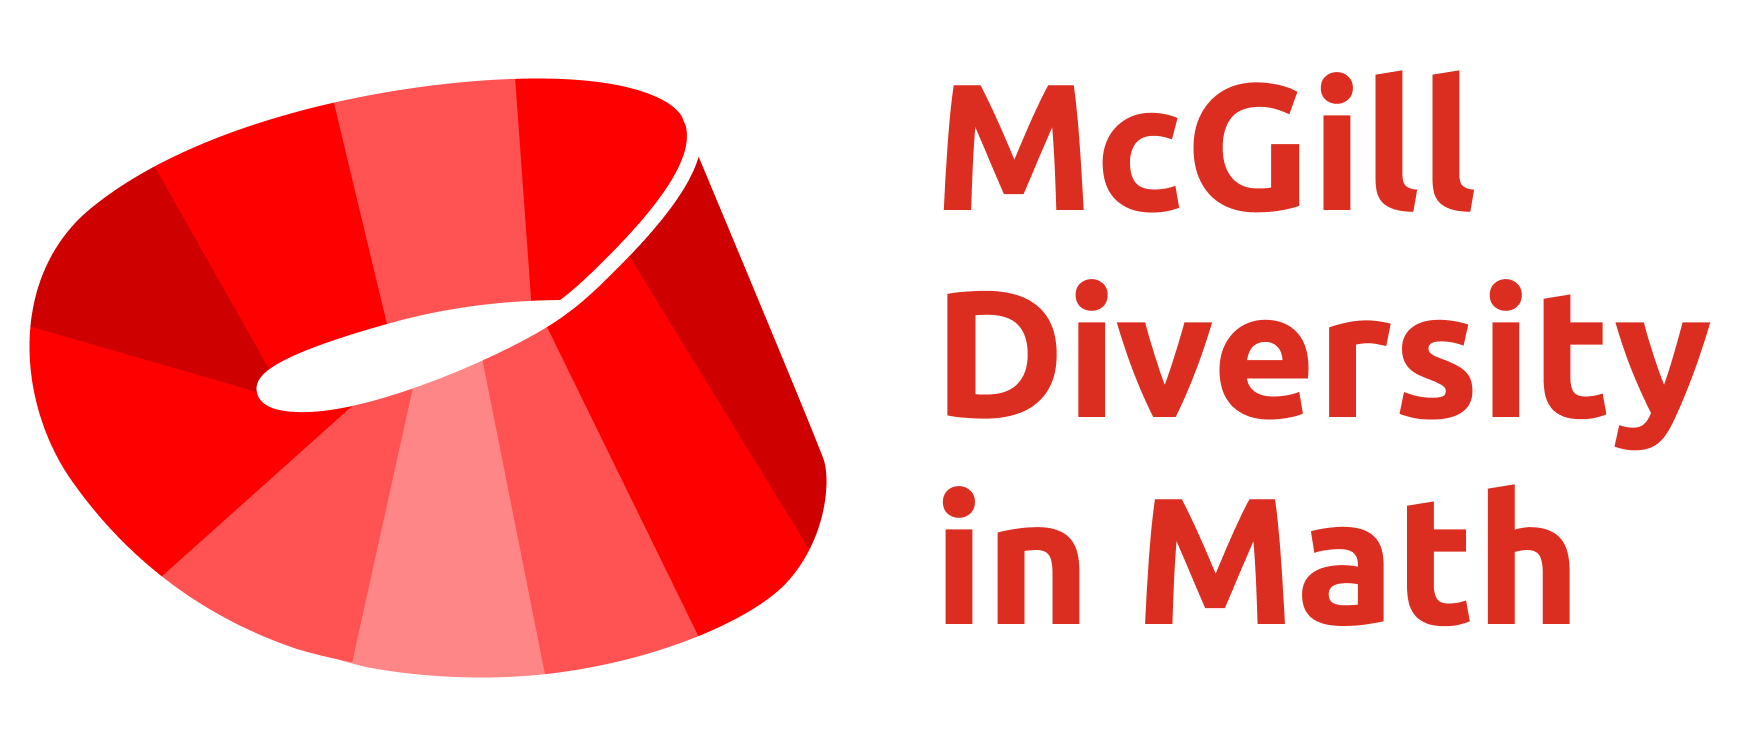 McGill Diversity in Math